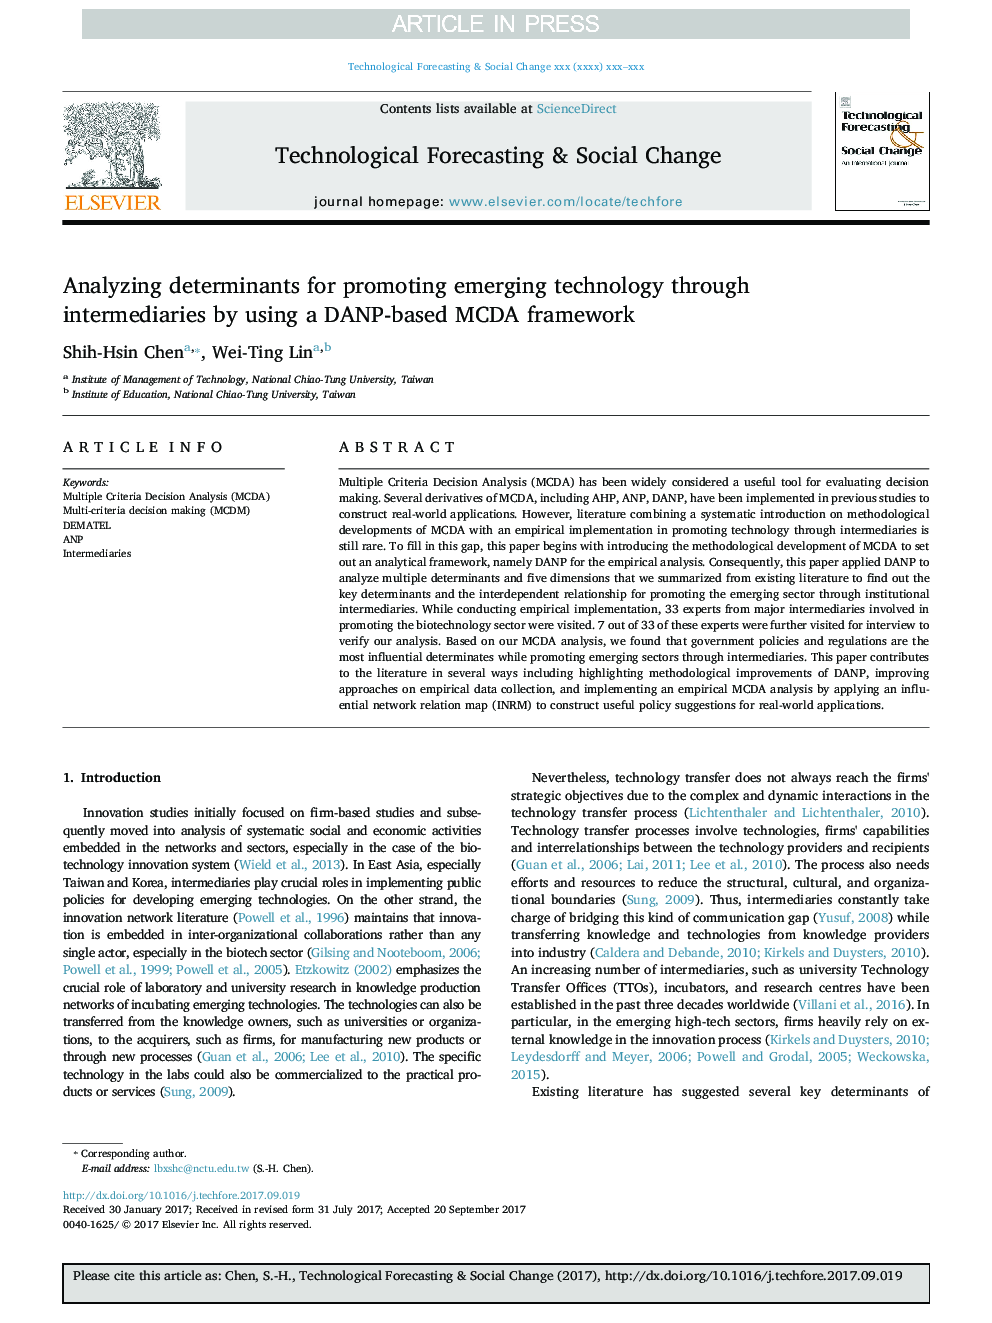 Analyzing determinants for promoting emerging technology through intermediaries by using a DANP-based MCDA framework